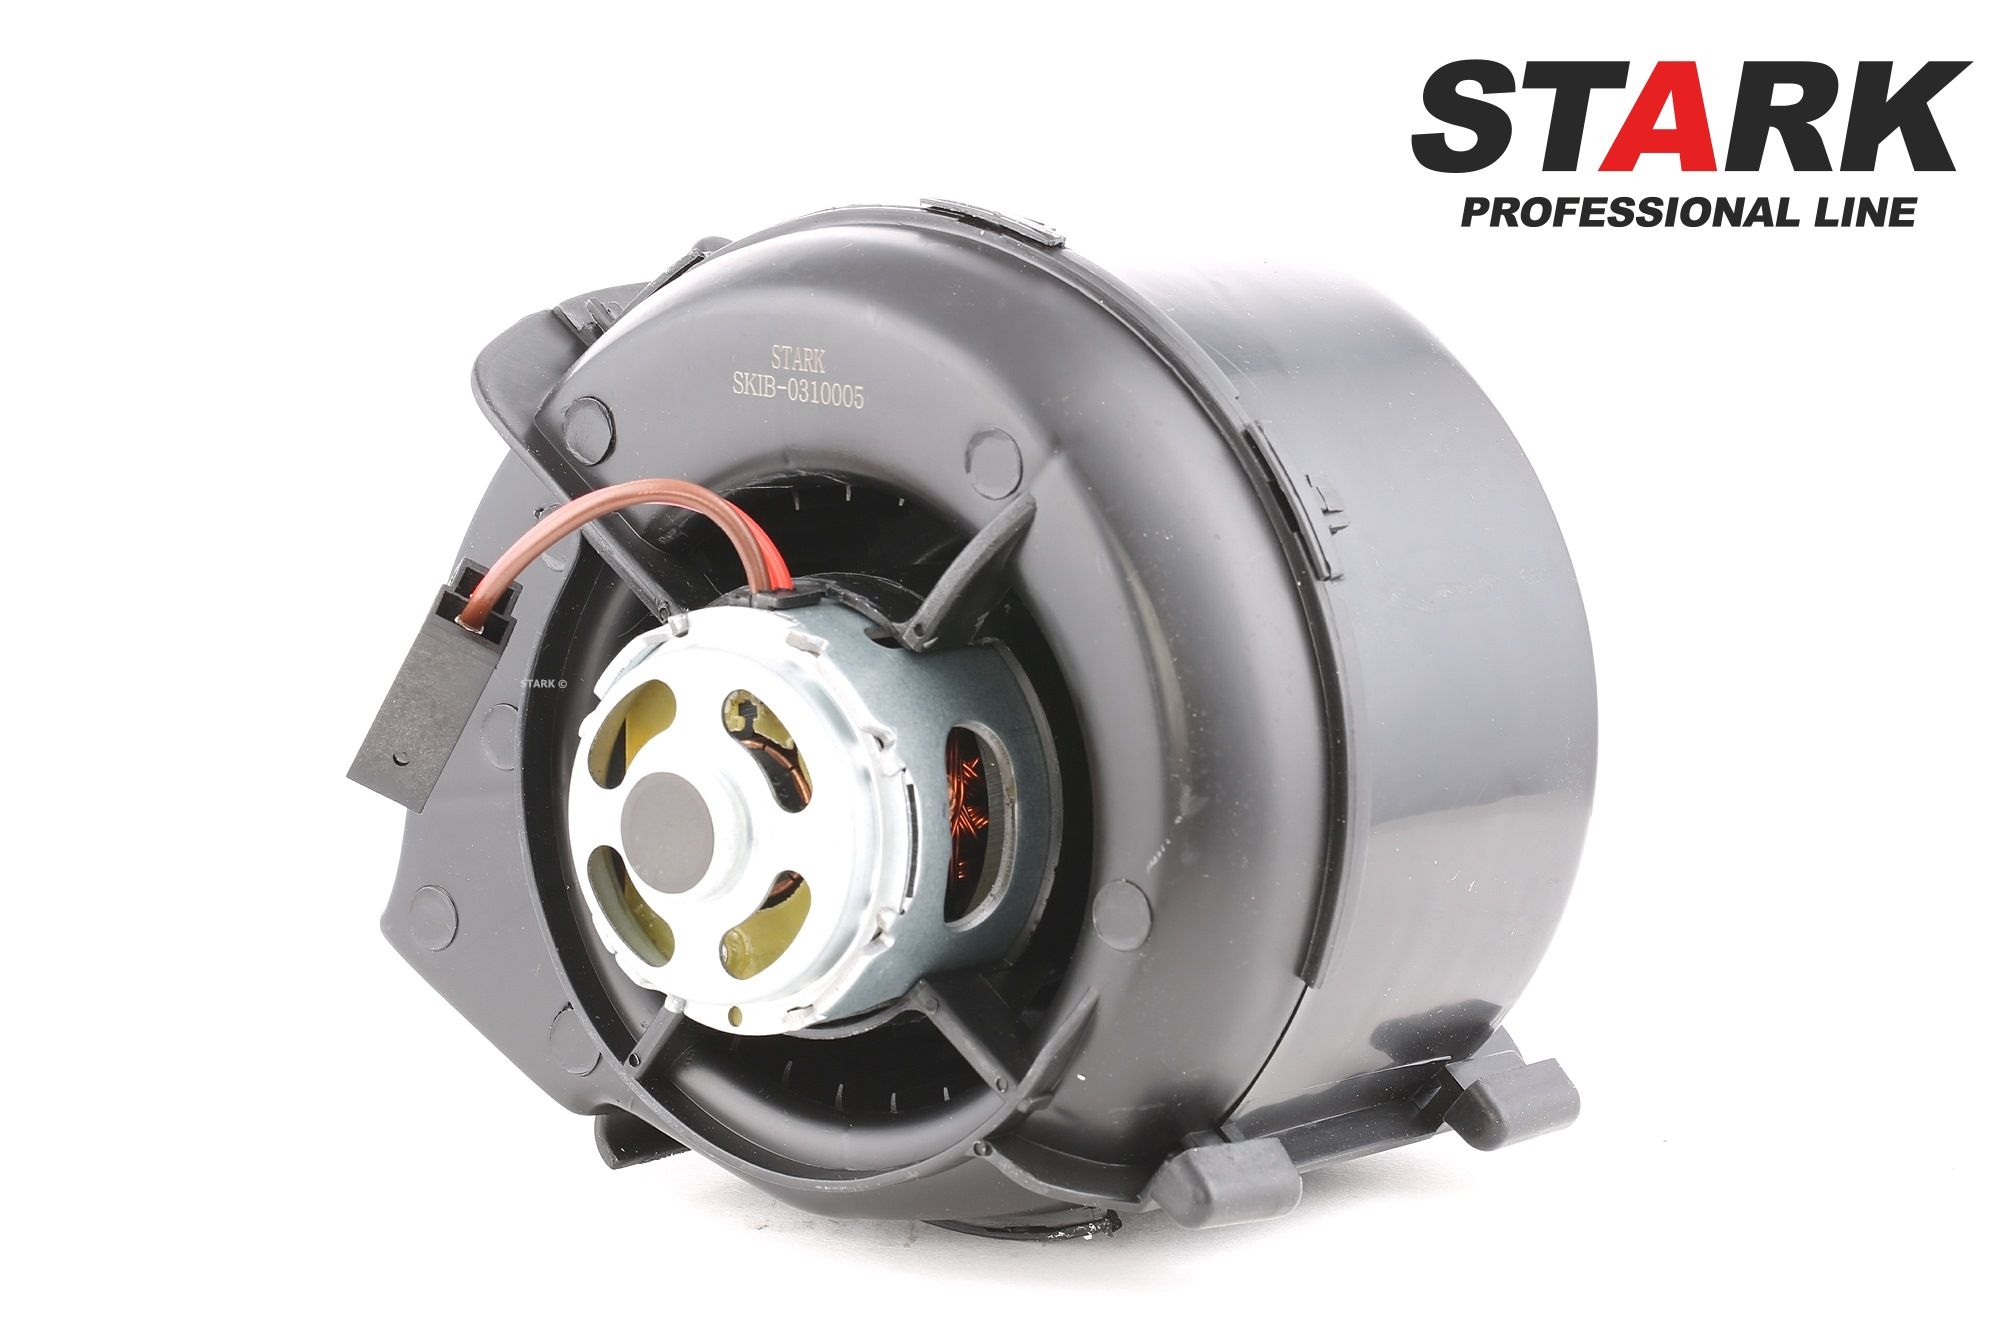 STARK for left-hand drive vehicles Voltage: 12V, Rated Power: 180W Blower motor SKIB-0310005 buy